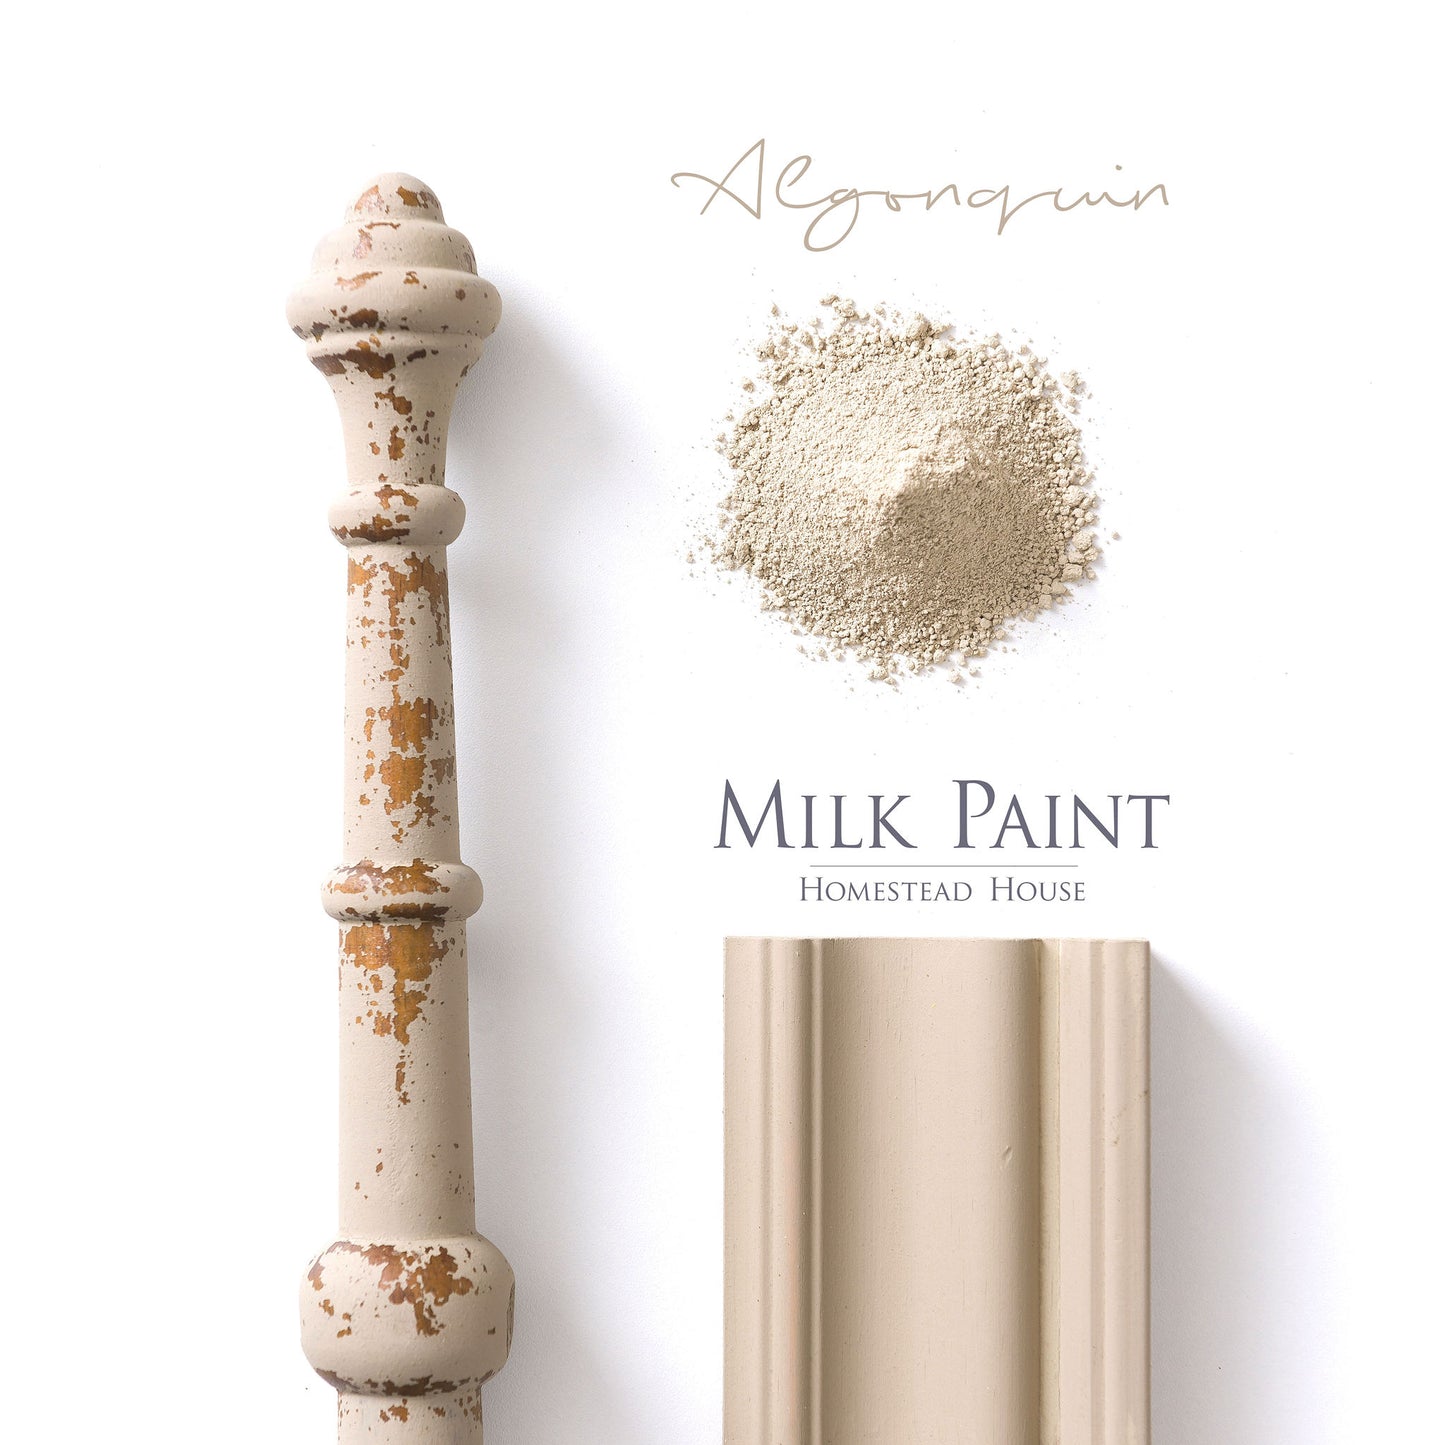 Milchfarbe | HH Milk Paint - Algonquin